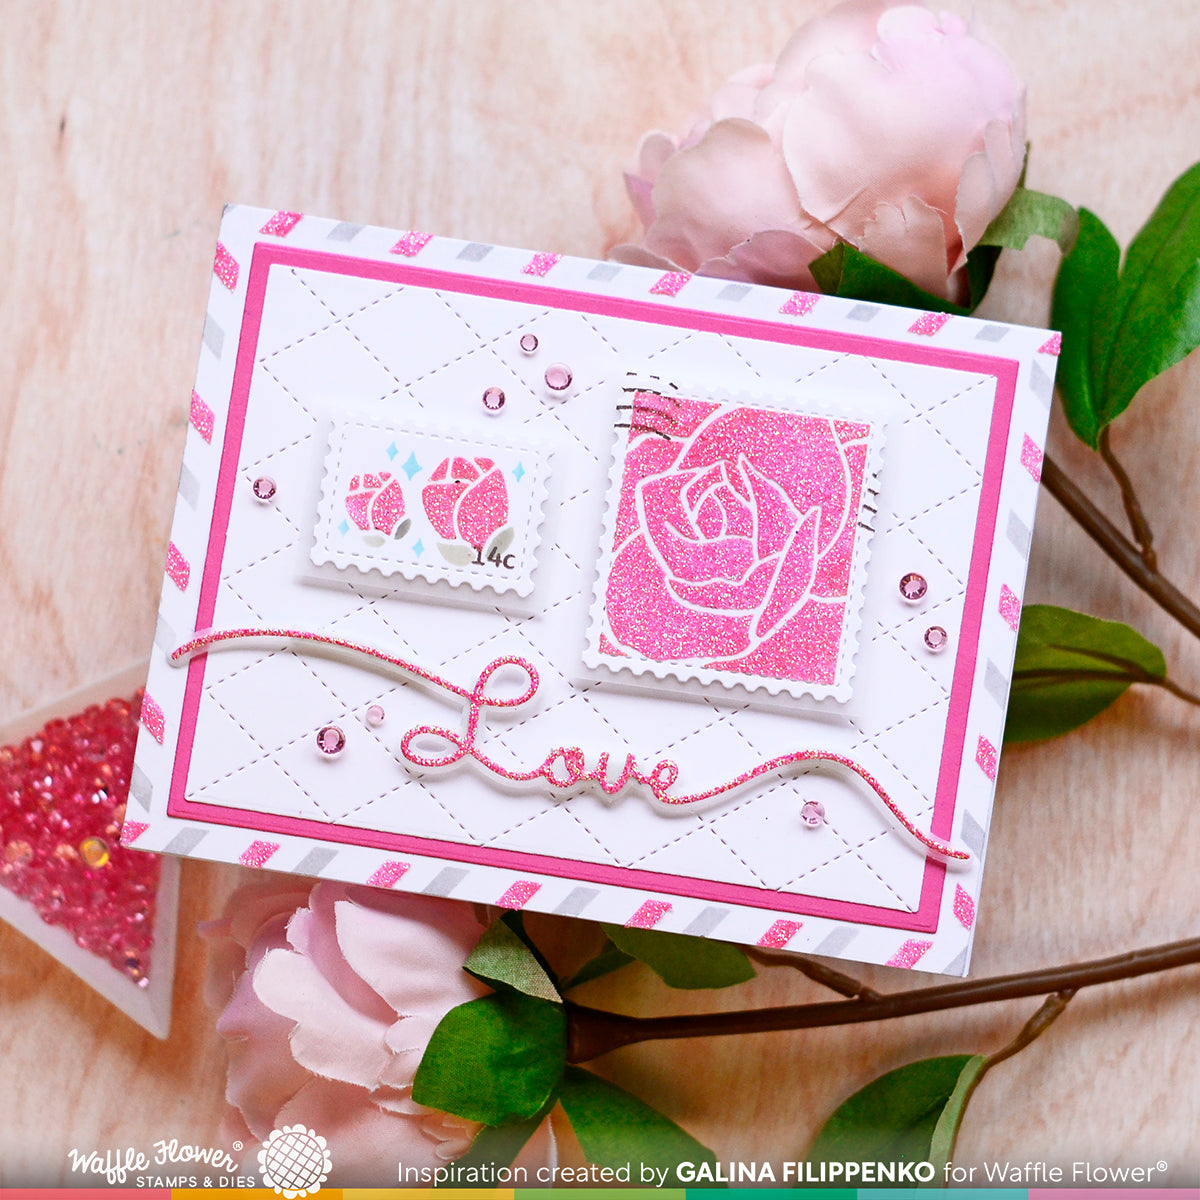 Surprise - 1 jolie enveloppe rose